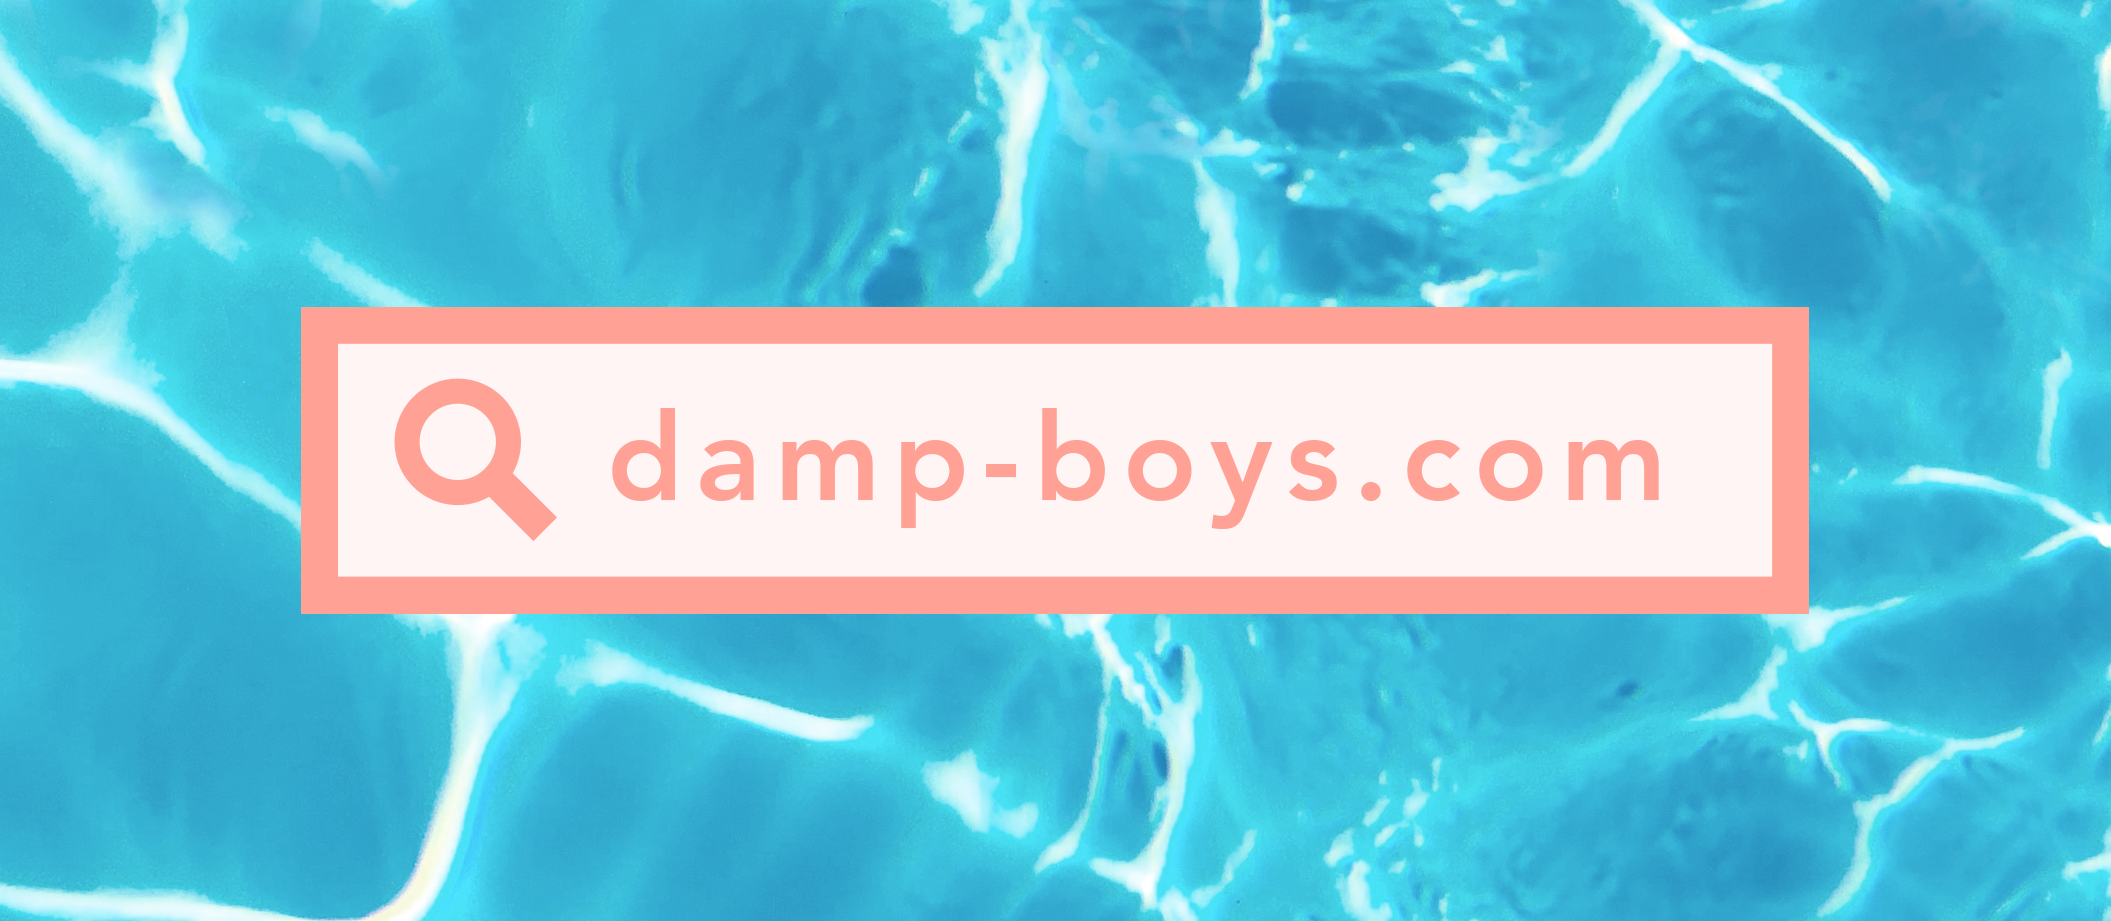 Damp Boys Dot Com